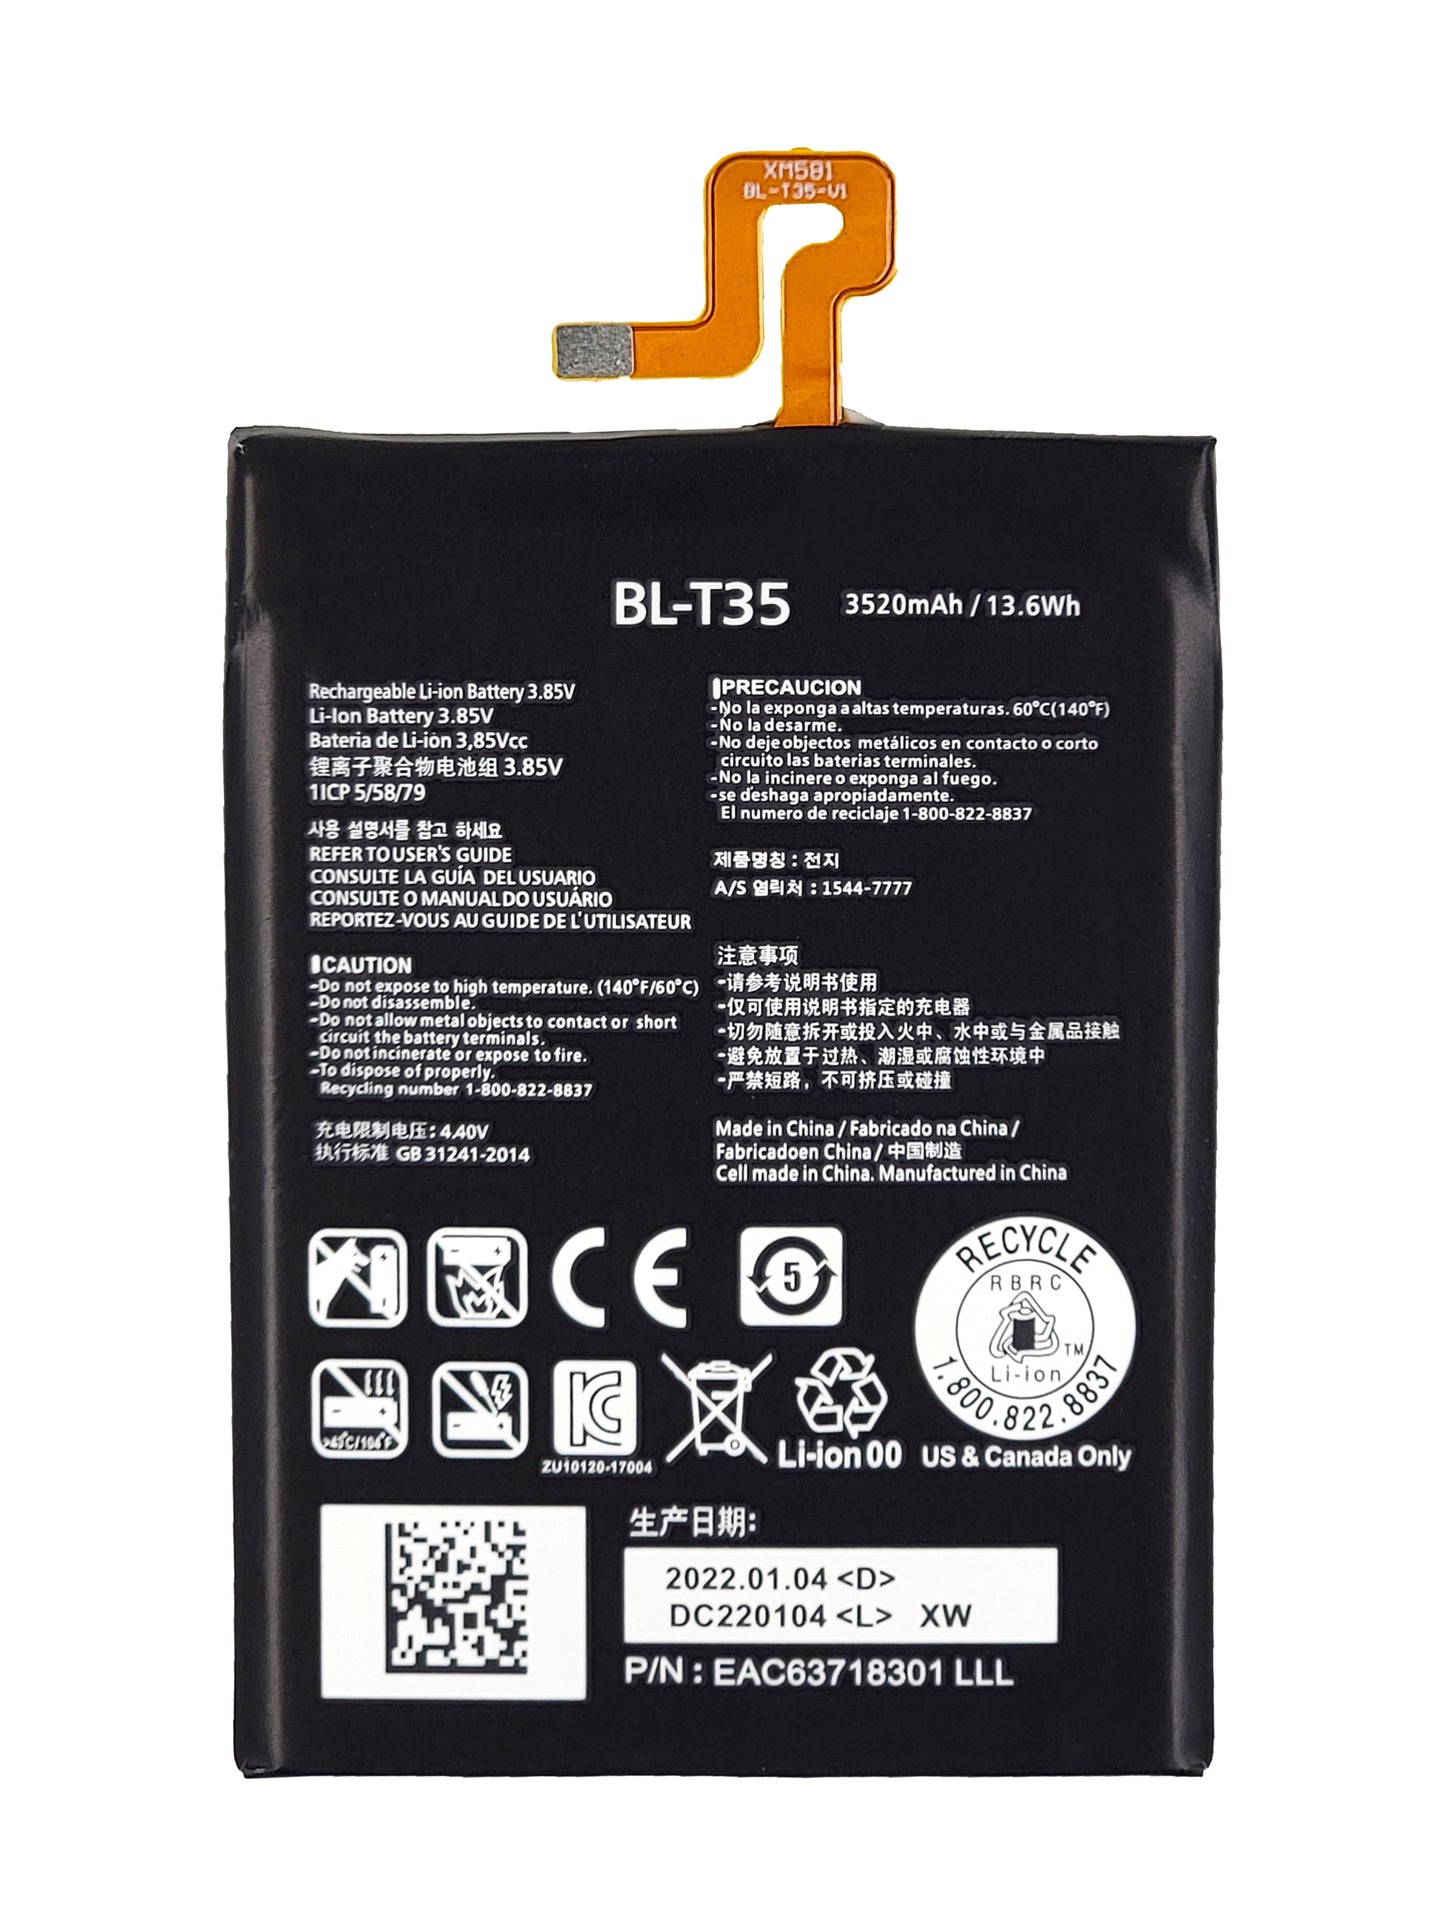 GOP Pixel 2 XL Battery (BL T35) Premium